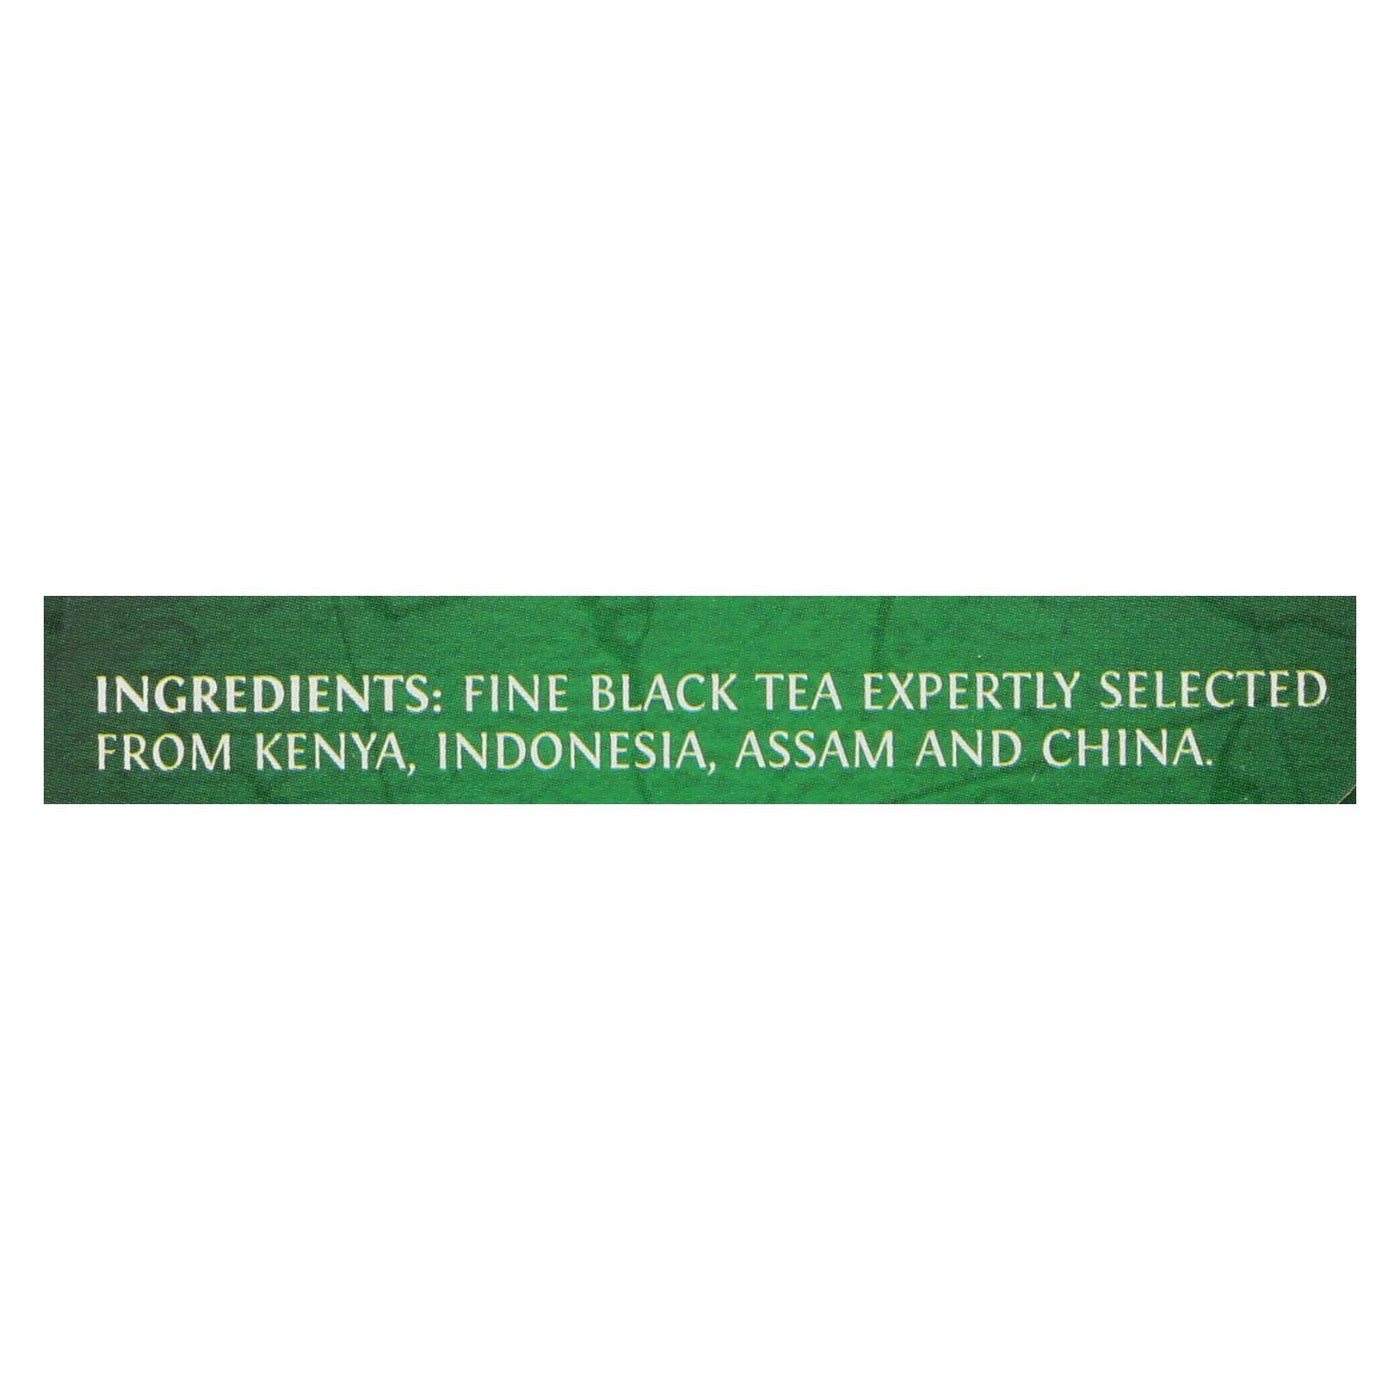 Twinings Tea Breakfast Tea - Irish - Case Of 6 - 20 Bags | OnlyNaturals.us